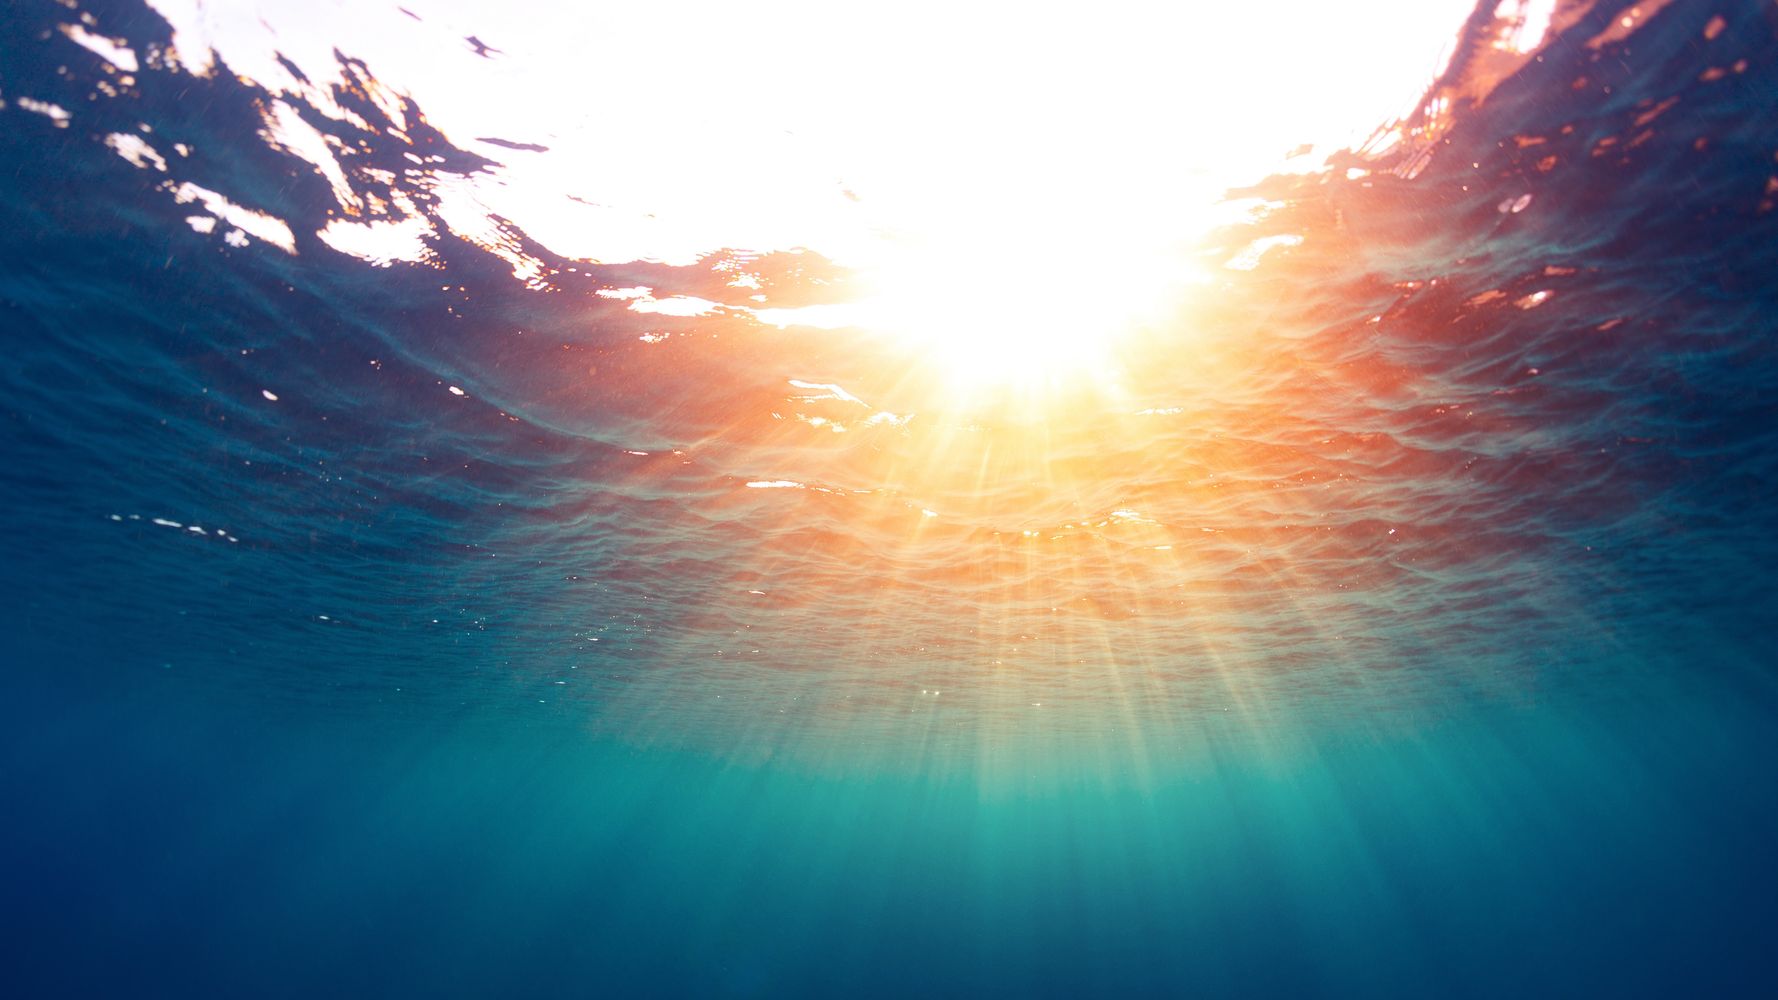 Underwater sound waves help scientists locate ocean impacts - News